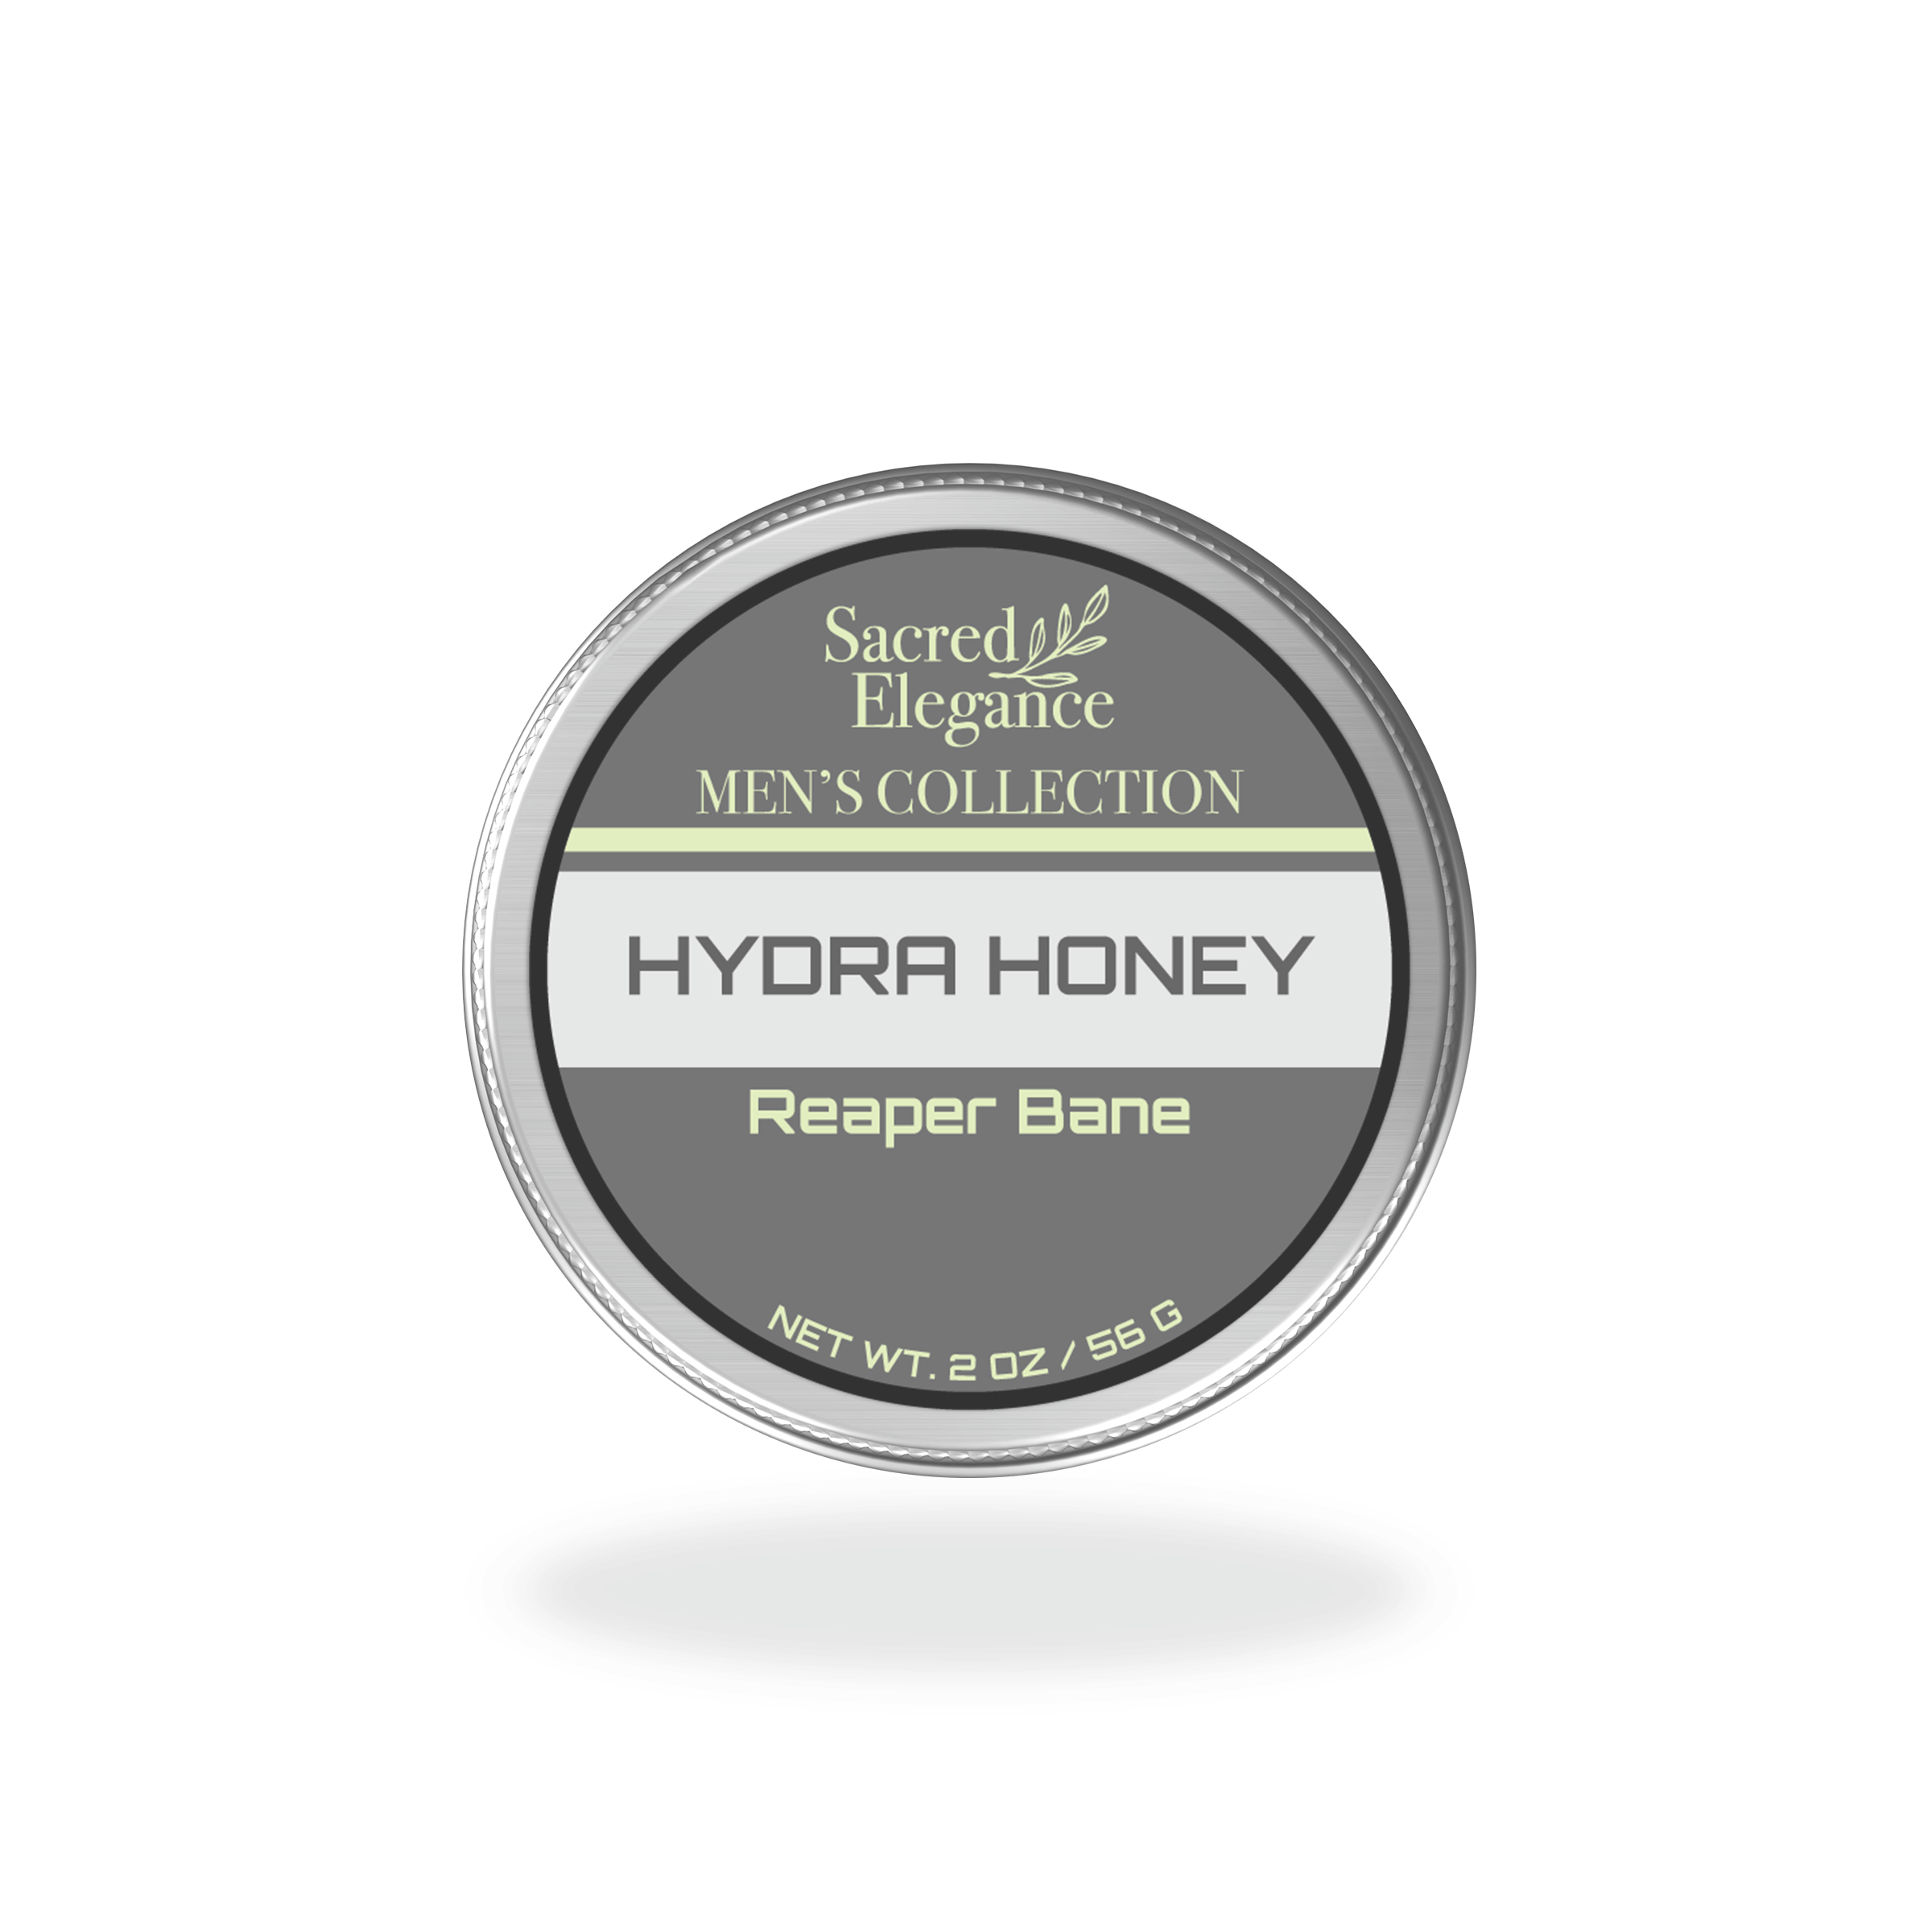 Reaper Bane Hydra Honey "Wax"